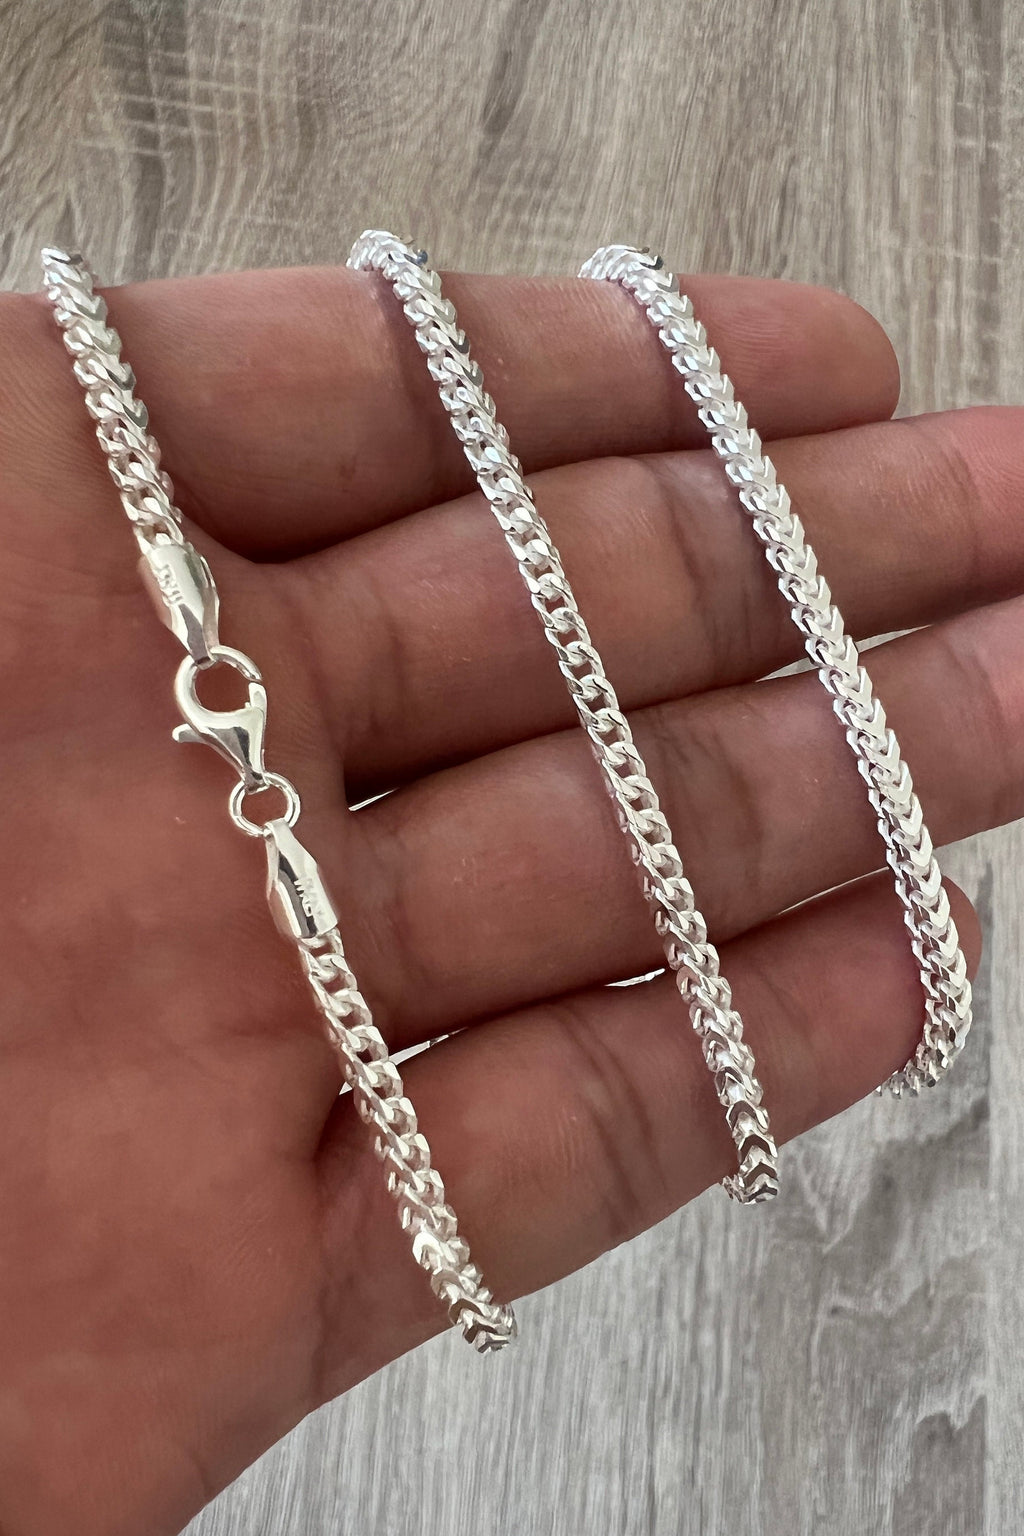 2.5mm 925 Franco Sterling Silver Solid Chain Bracelet Necklace